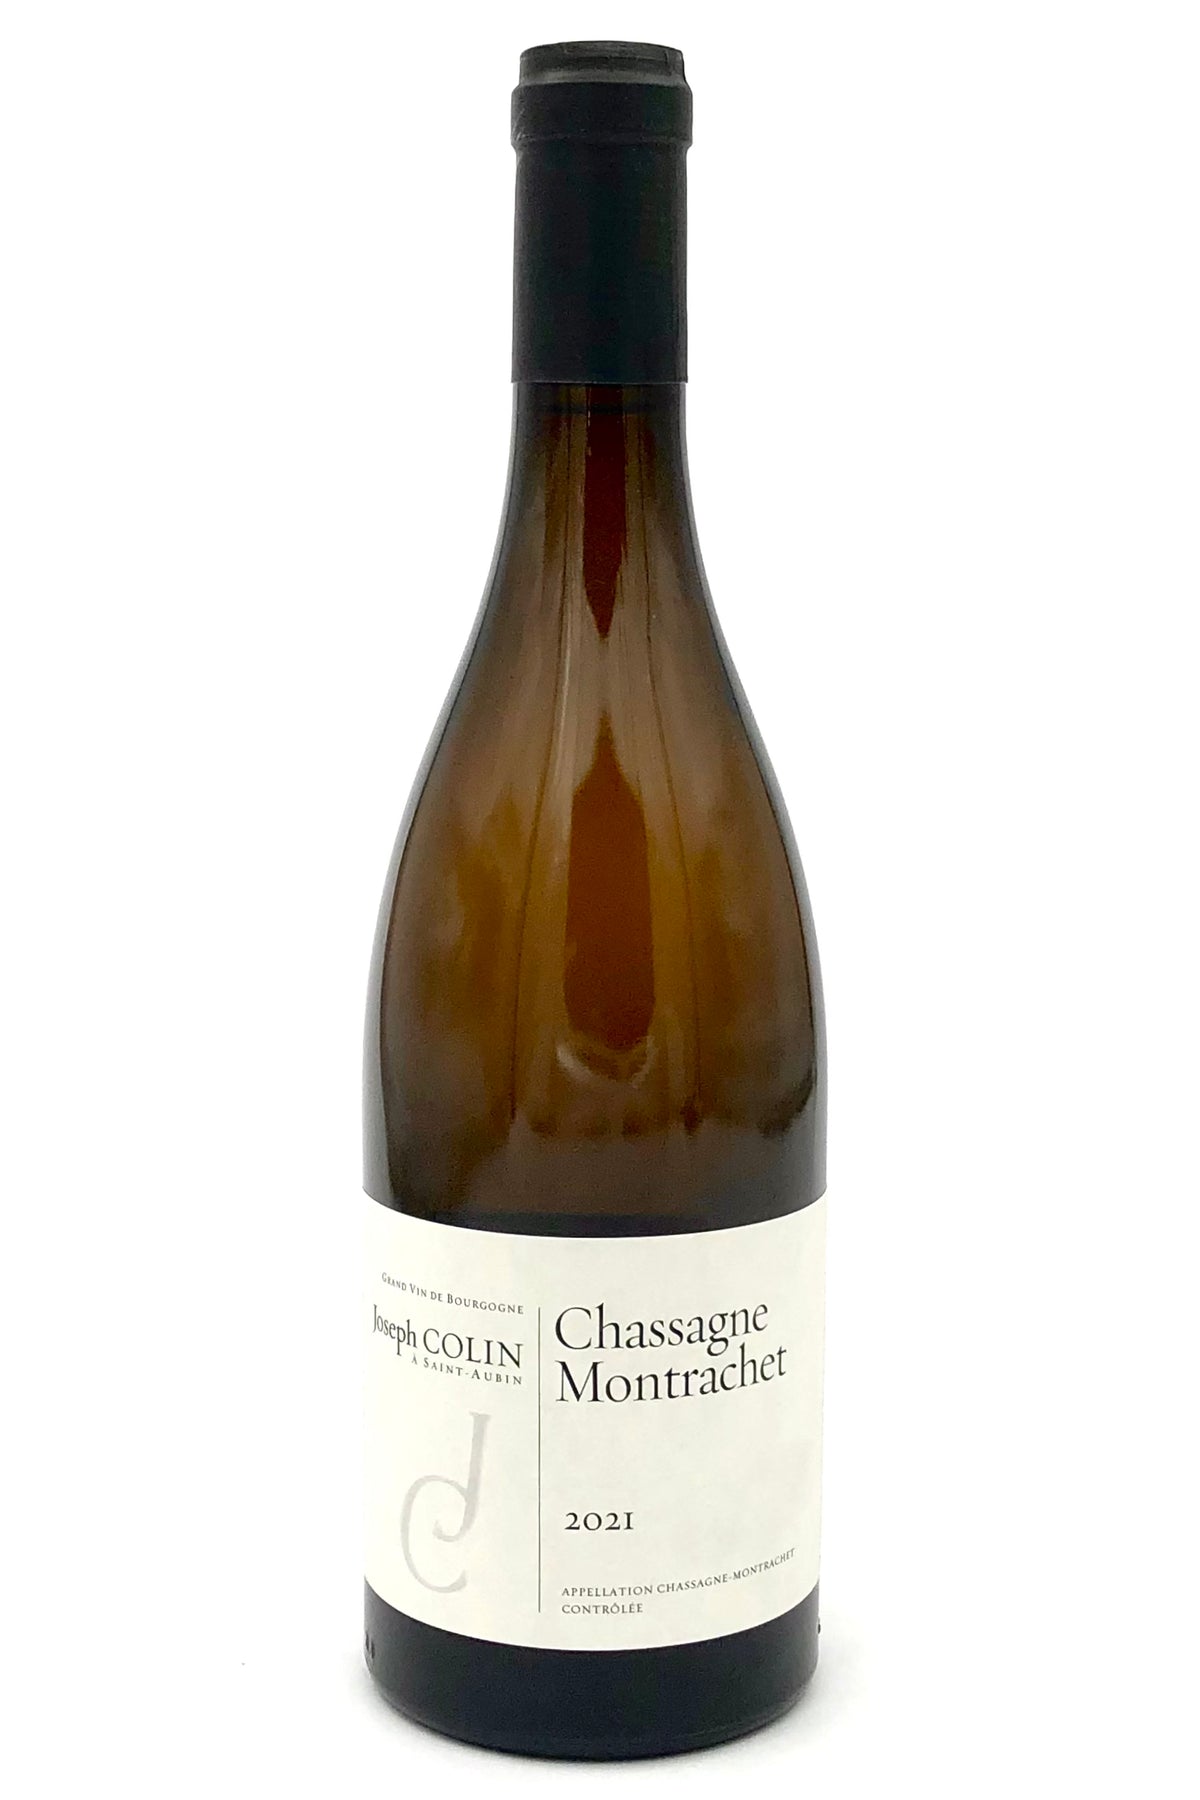 Joseph Colin 2021 Chassagne-Montrachet Blanc